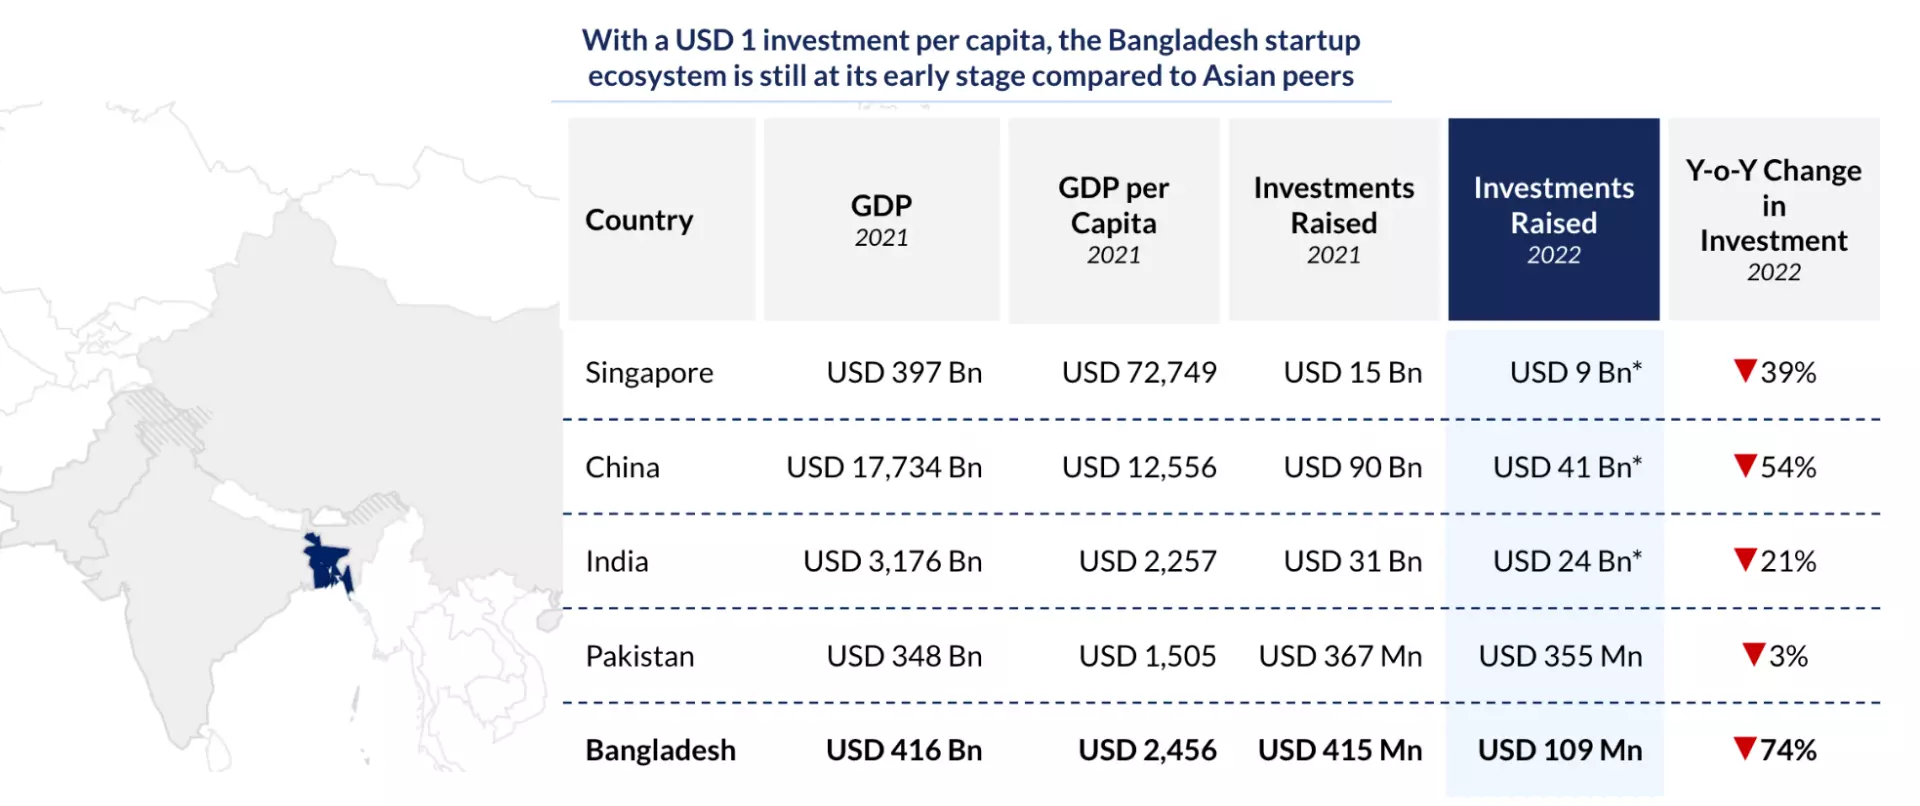 Comparative analysis of startup investment raised per capita by Singapore, China, India, Pakistan, and Bangladesh